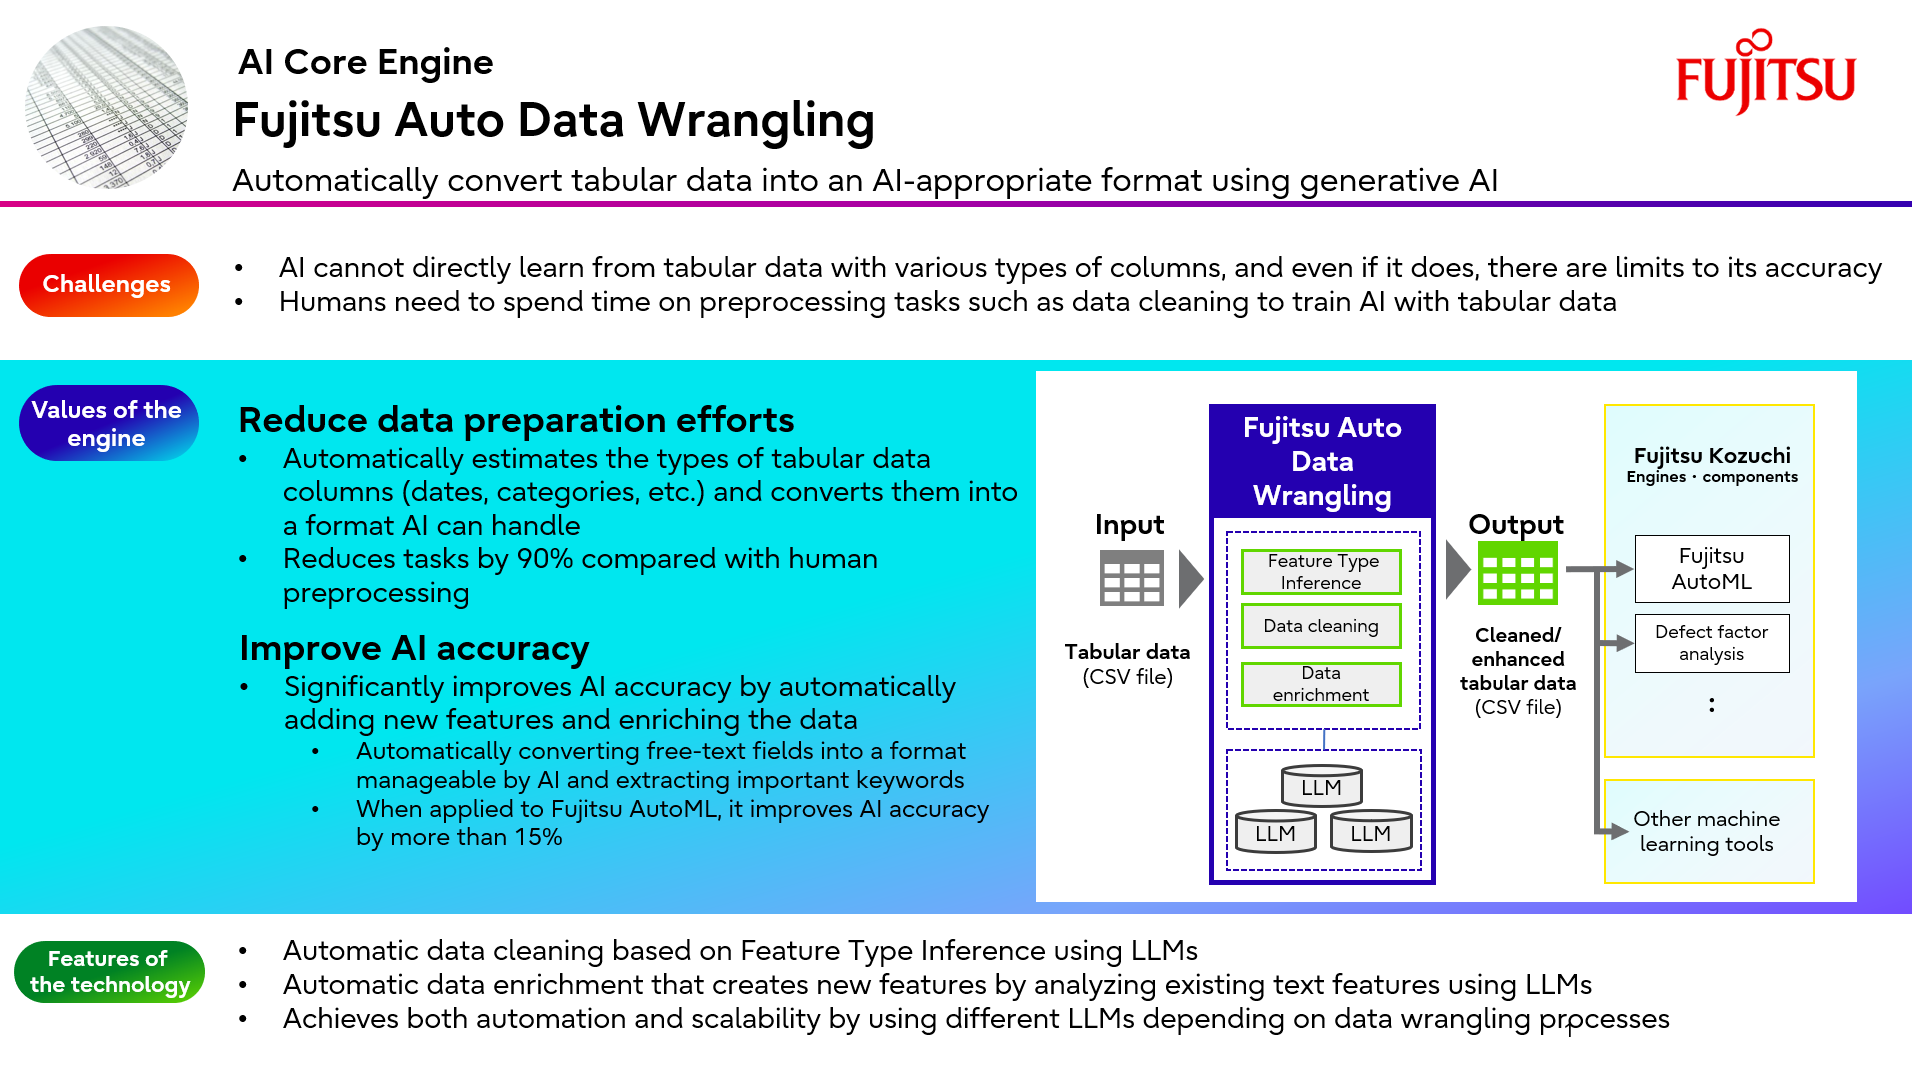 Overview of Fujitsu Auto Data Wrangling